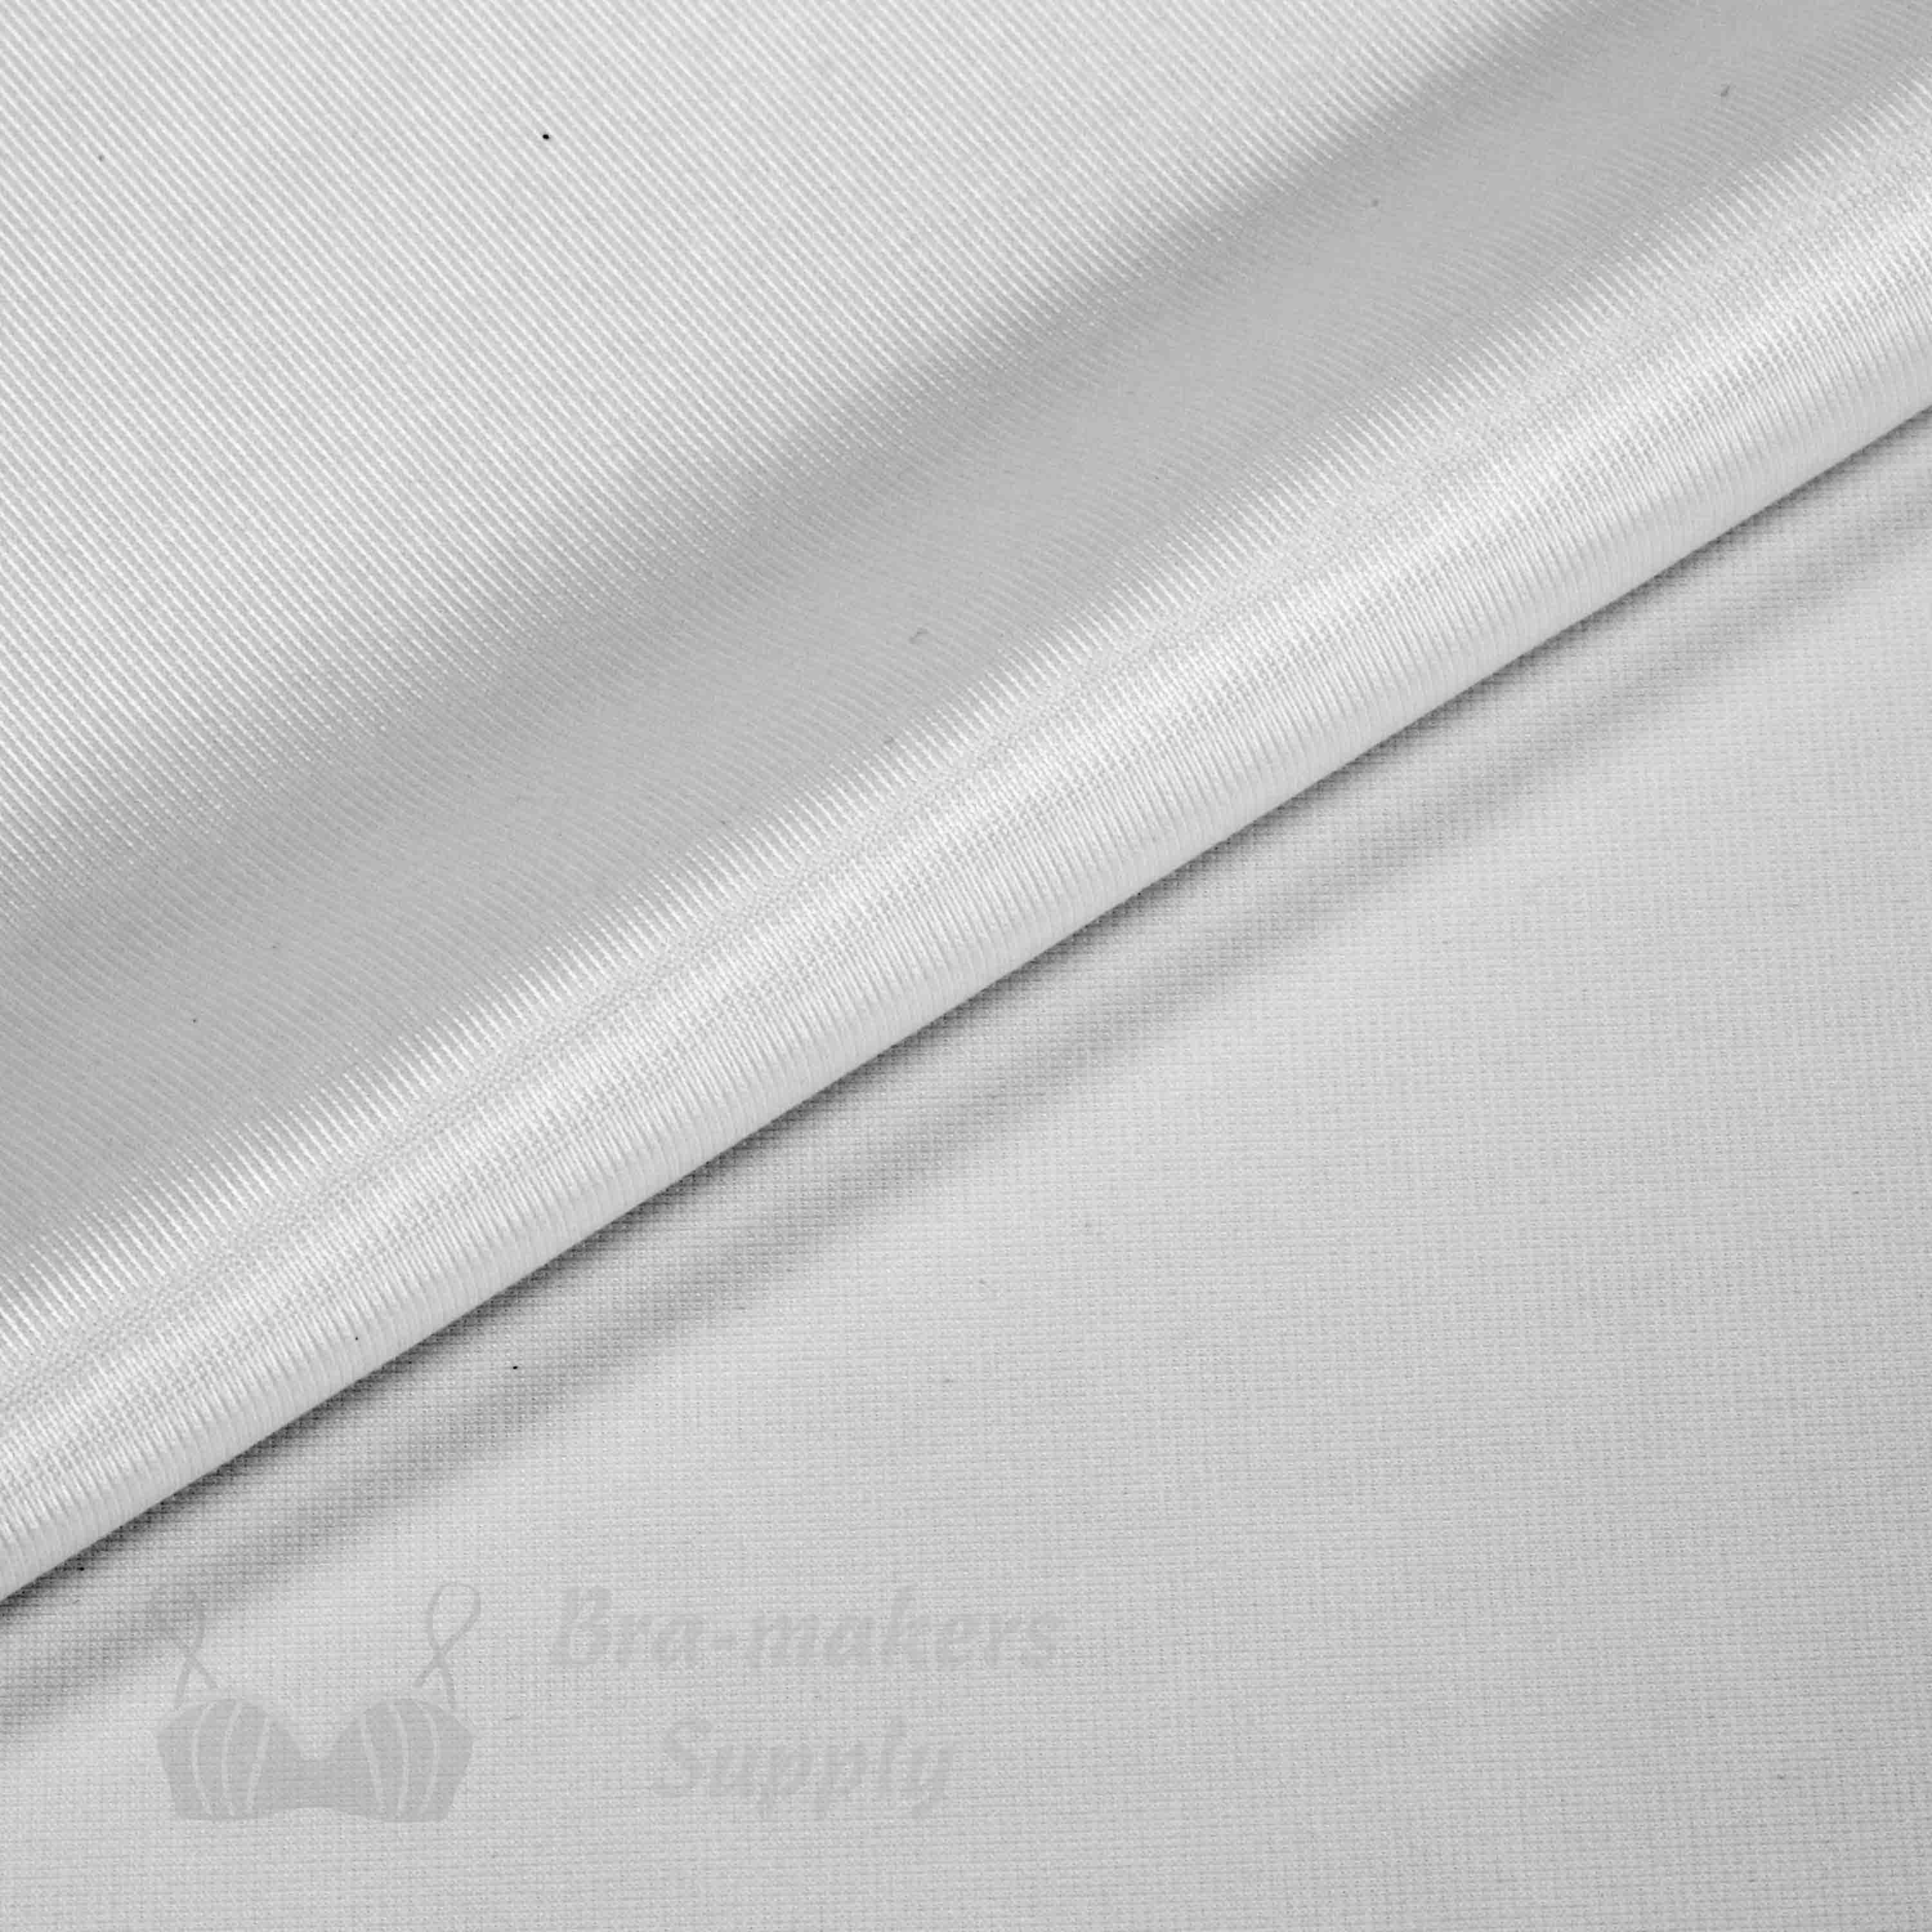 https://www.braandcorsetsupplies.com/wp-content/uploads/2016/07/duoplex-reversible-low-stretch-bra-cup-fabric-FJ-6-white-or-low-stretch-bra-cup-fabric-bright-white-Pantone-11-0601-from-Bra-Makers-Supply-folded-.jpg